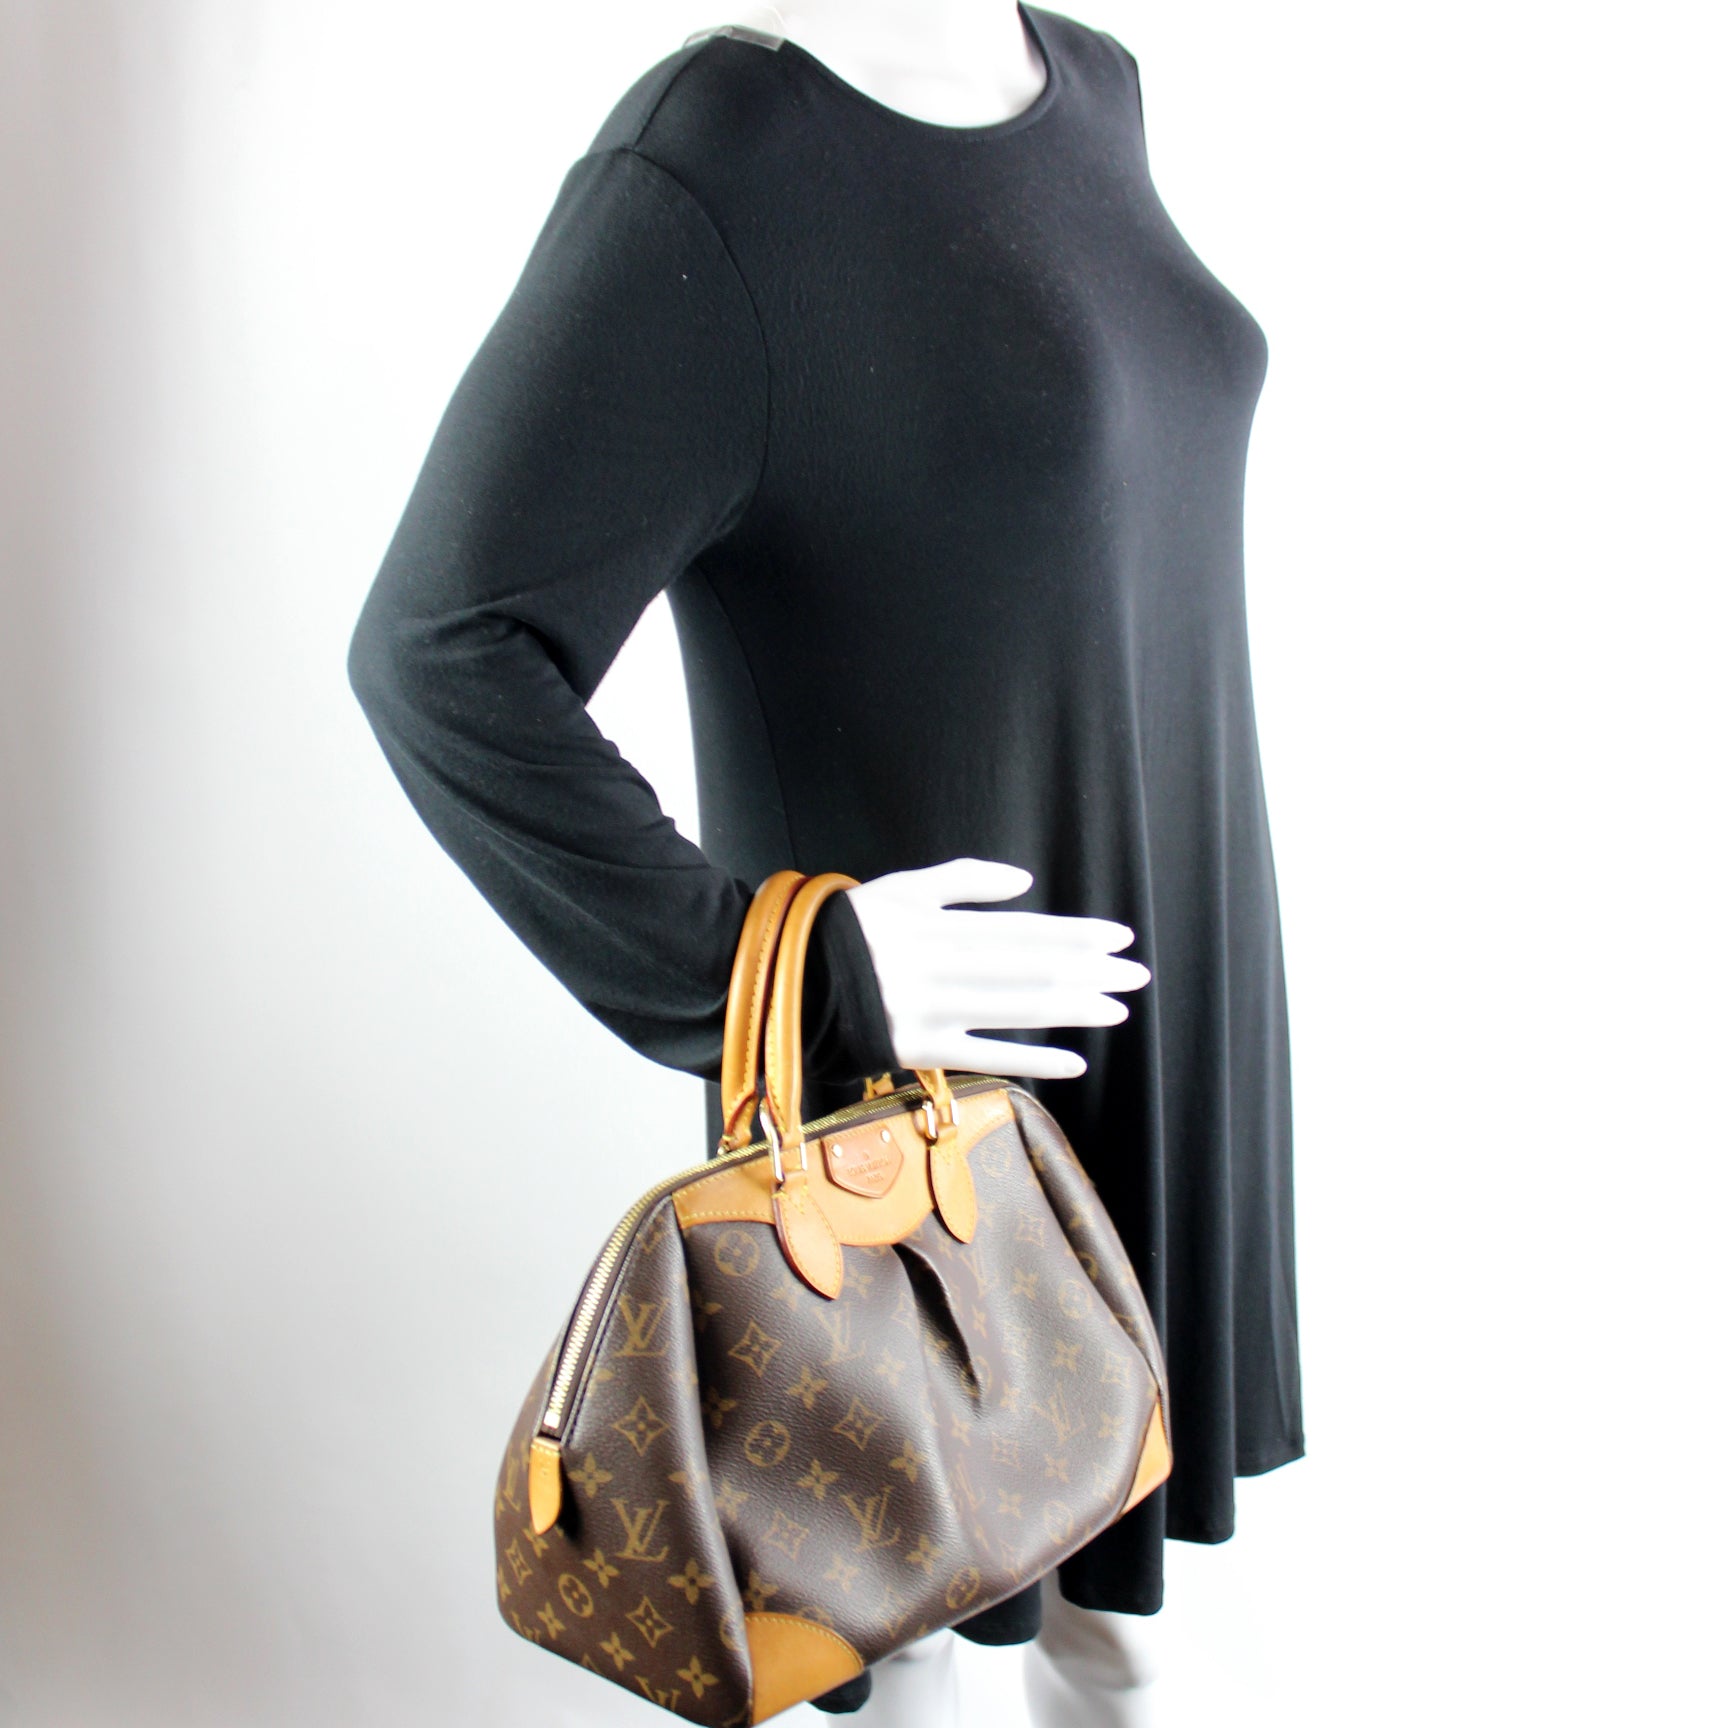 Segur NM Monogram – Keeks Designer Handbags